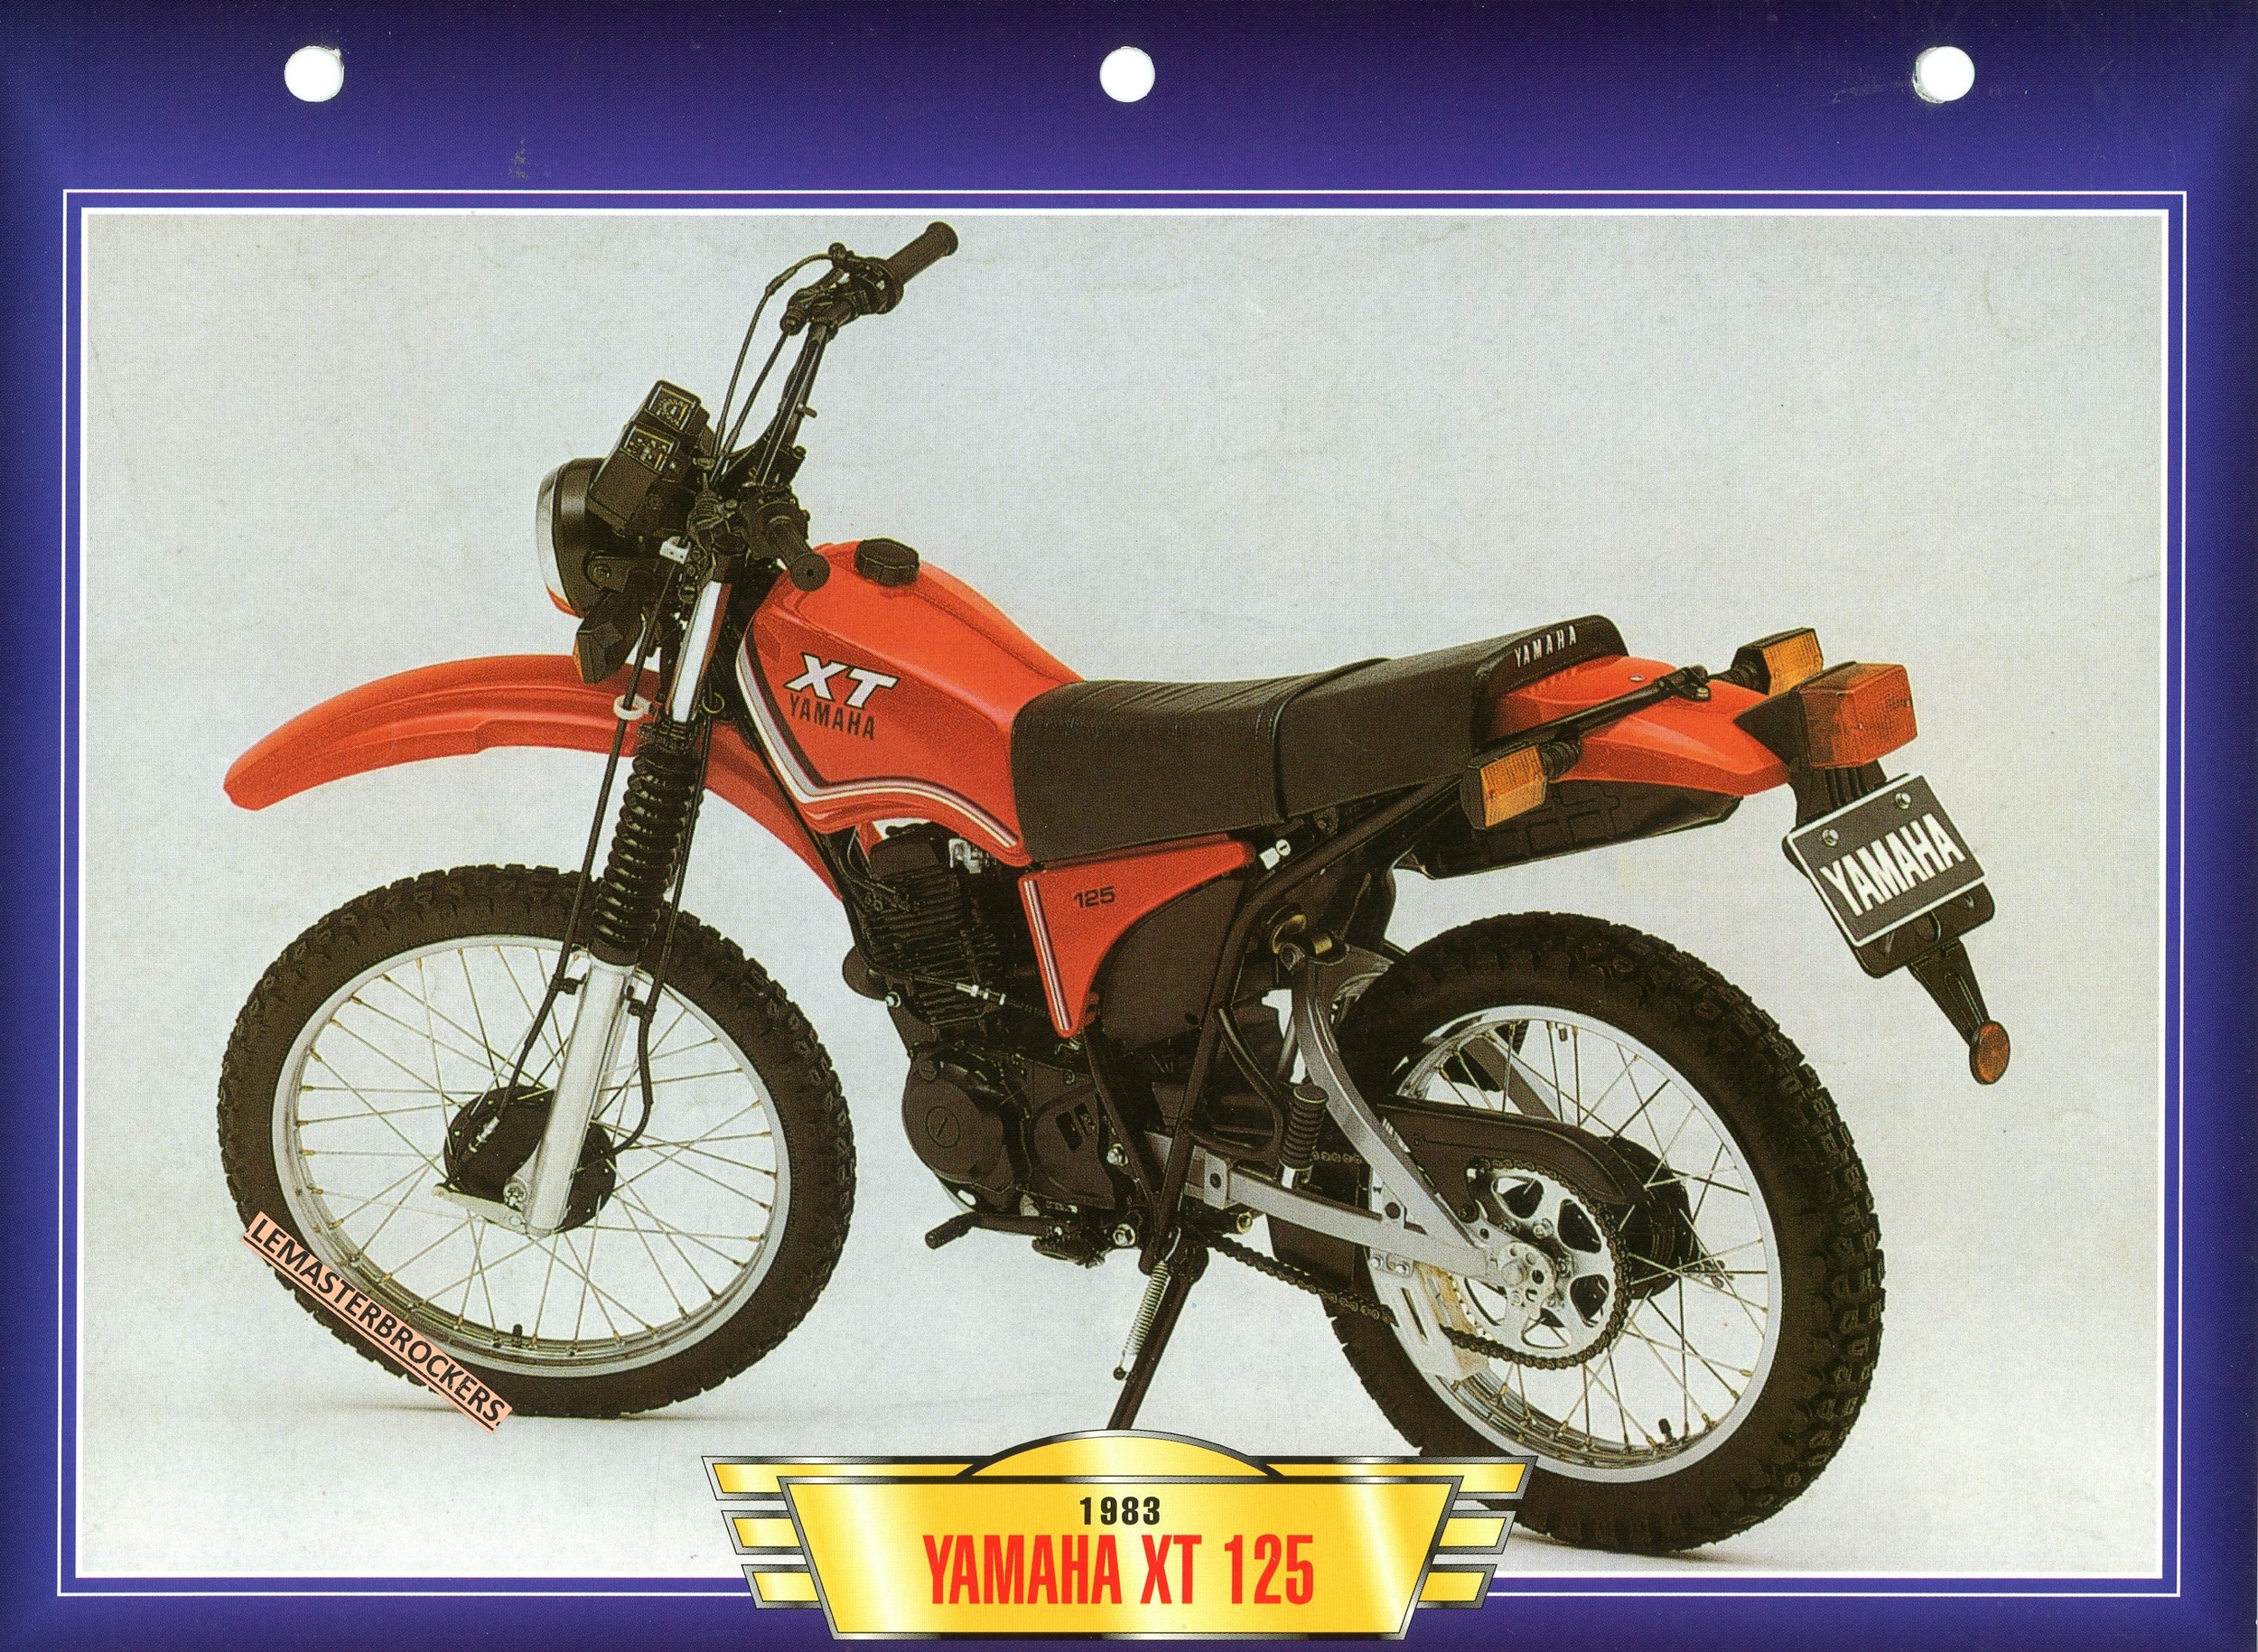 FICHE-MOTO-YAMAHA-XT125-1983-LEMASTERBROCKERS-CARS-MOTORCYCLES-ATLAS